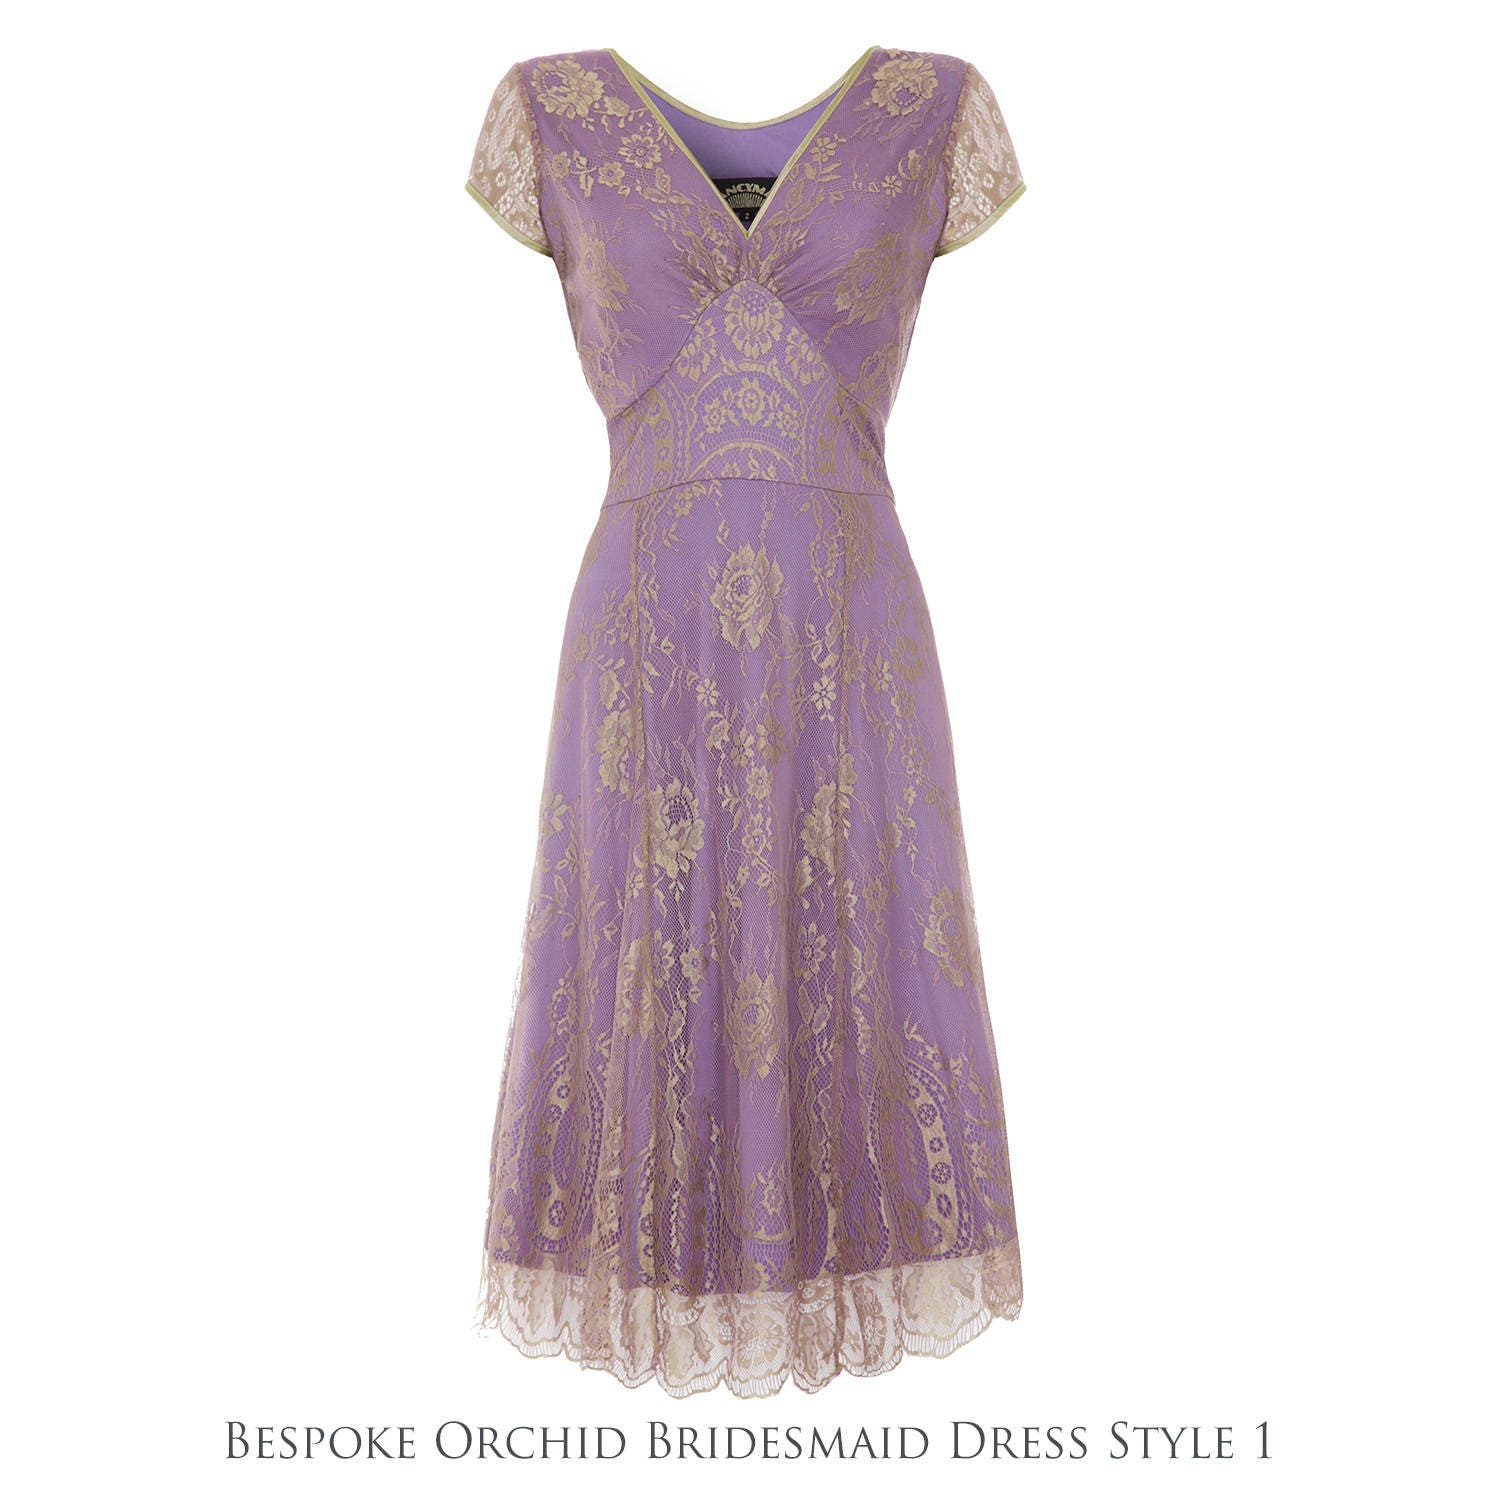 Bespoke Vintage Style Bridesmaid Dresses in Orchid - Etsy UK